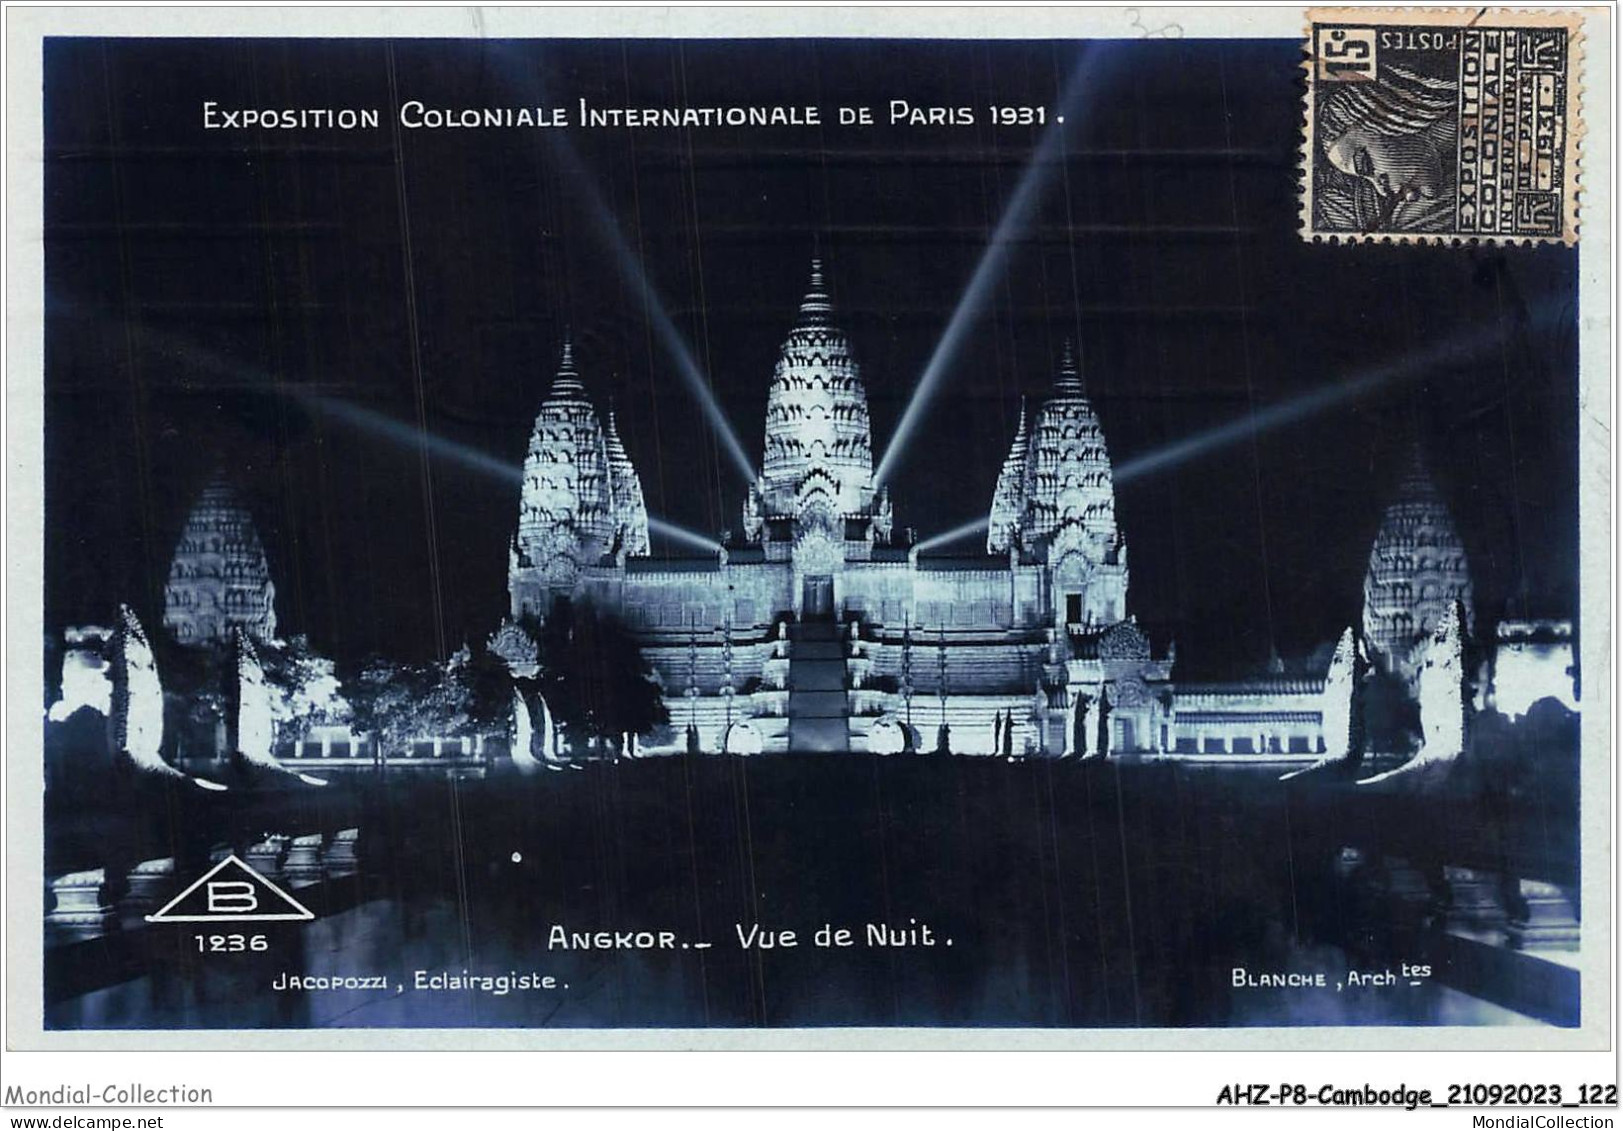 AHZP8-CAMBODGE-0744 - EXPOSITION COLONIALE INTERNATIONALE - PARIS 1931 - ANGKOR - VUE DE NUIT - Cambodia